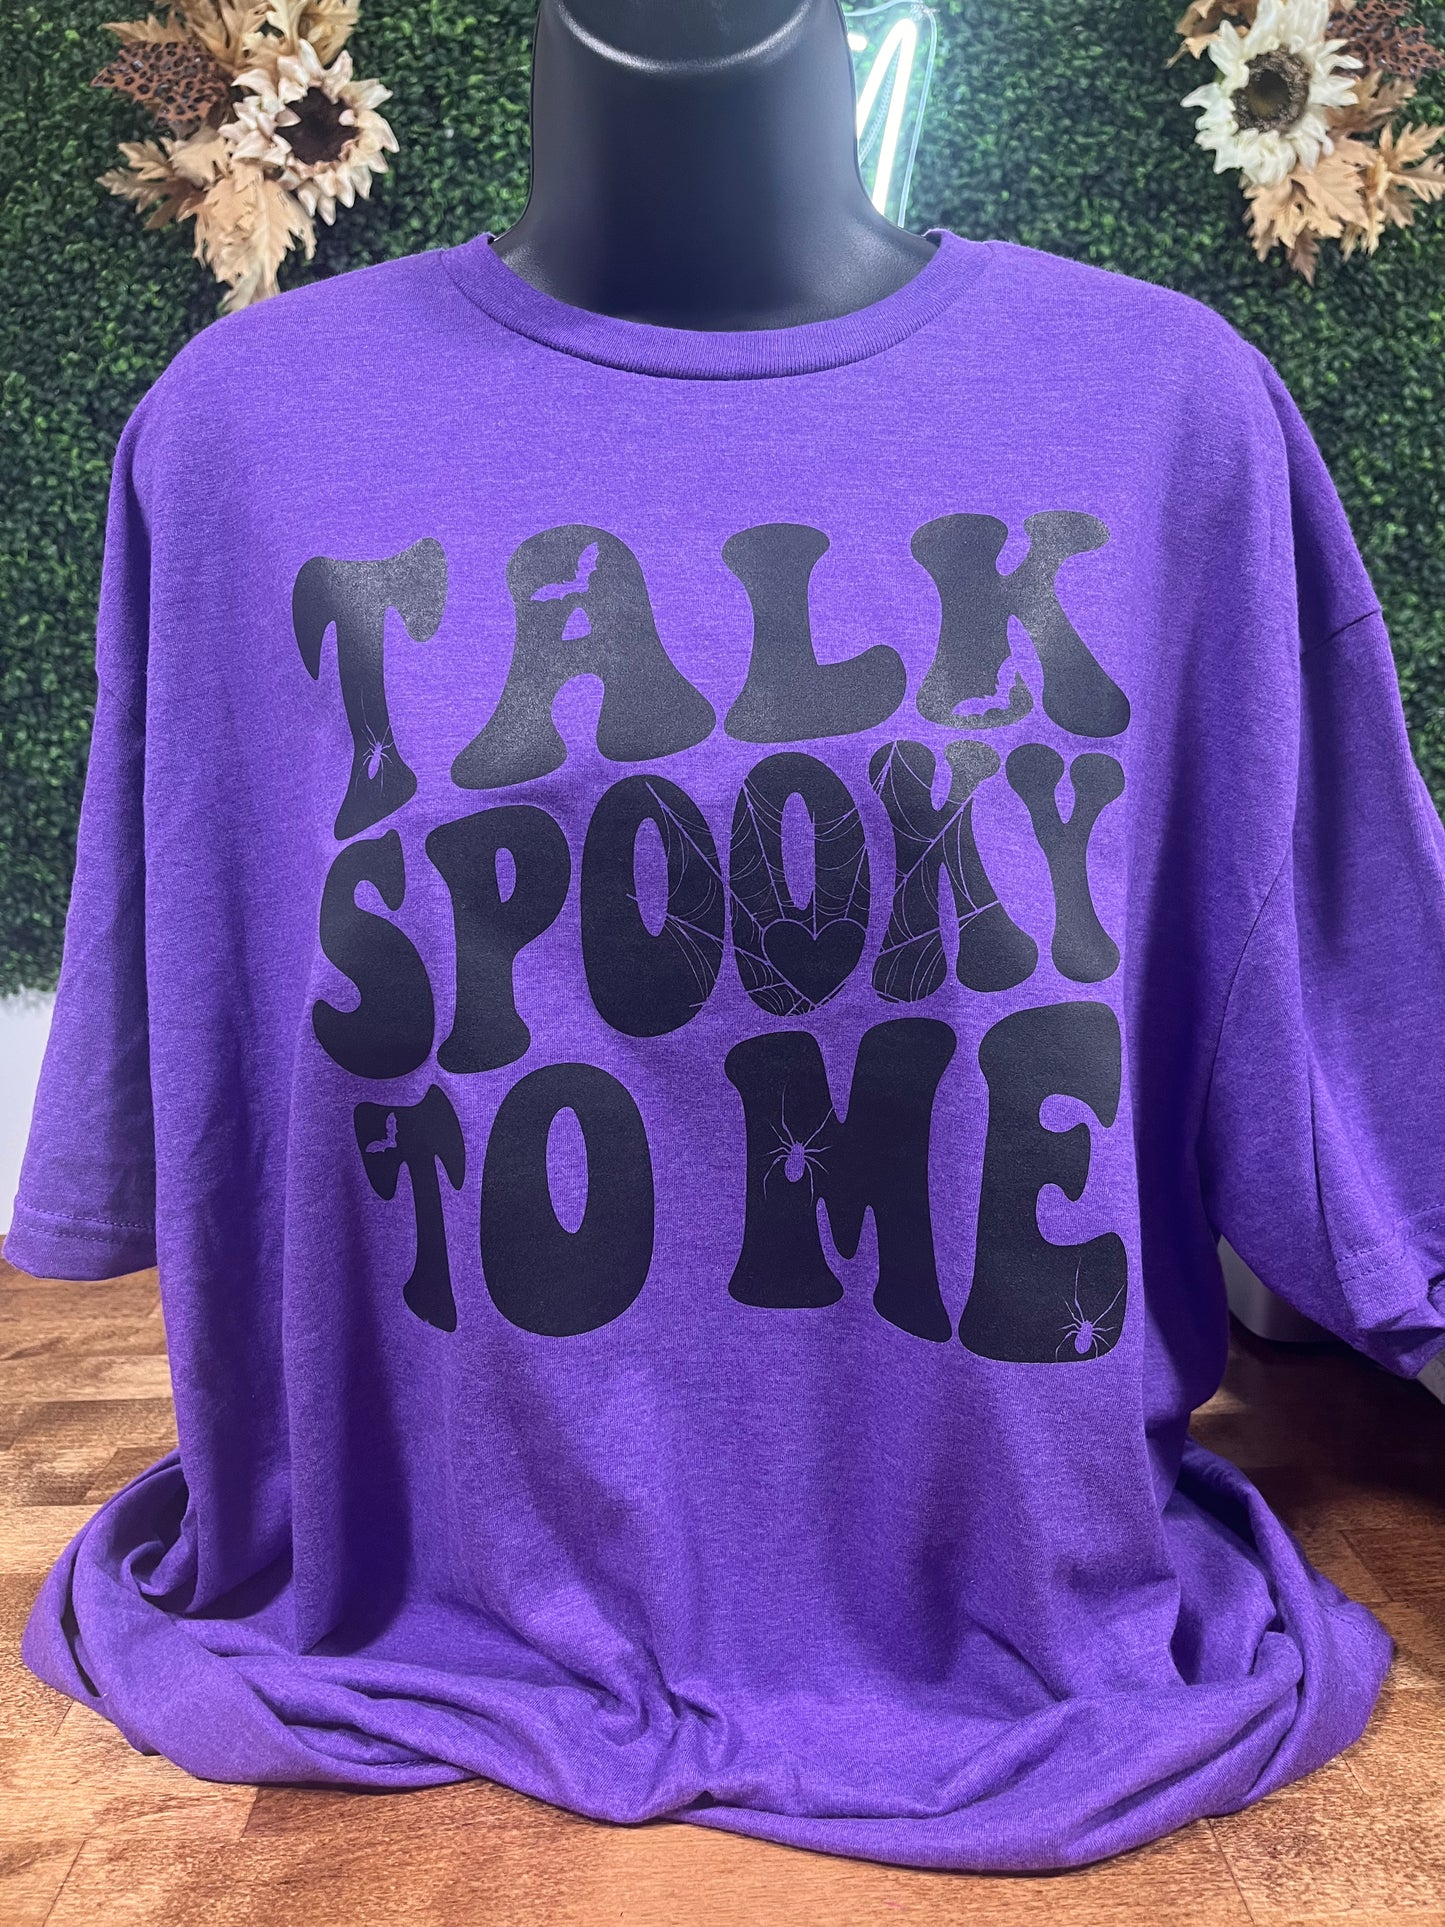 Talk spooky to me tee